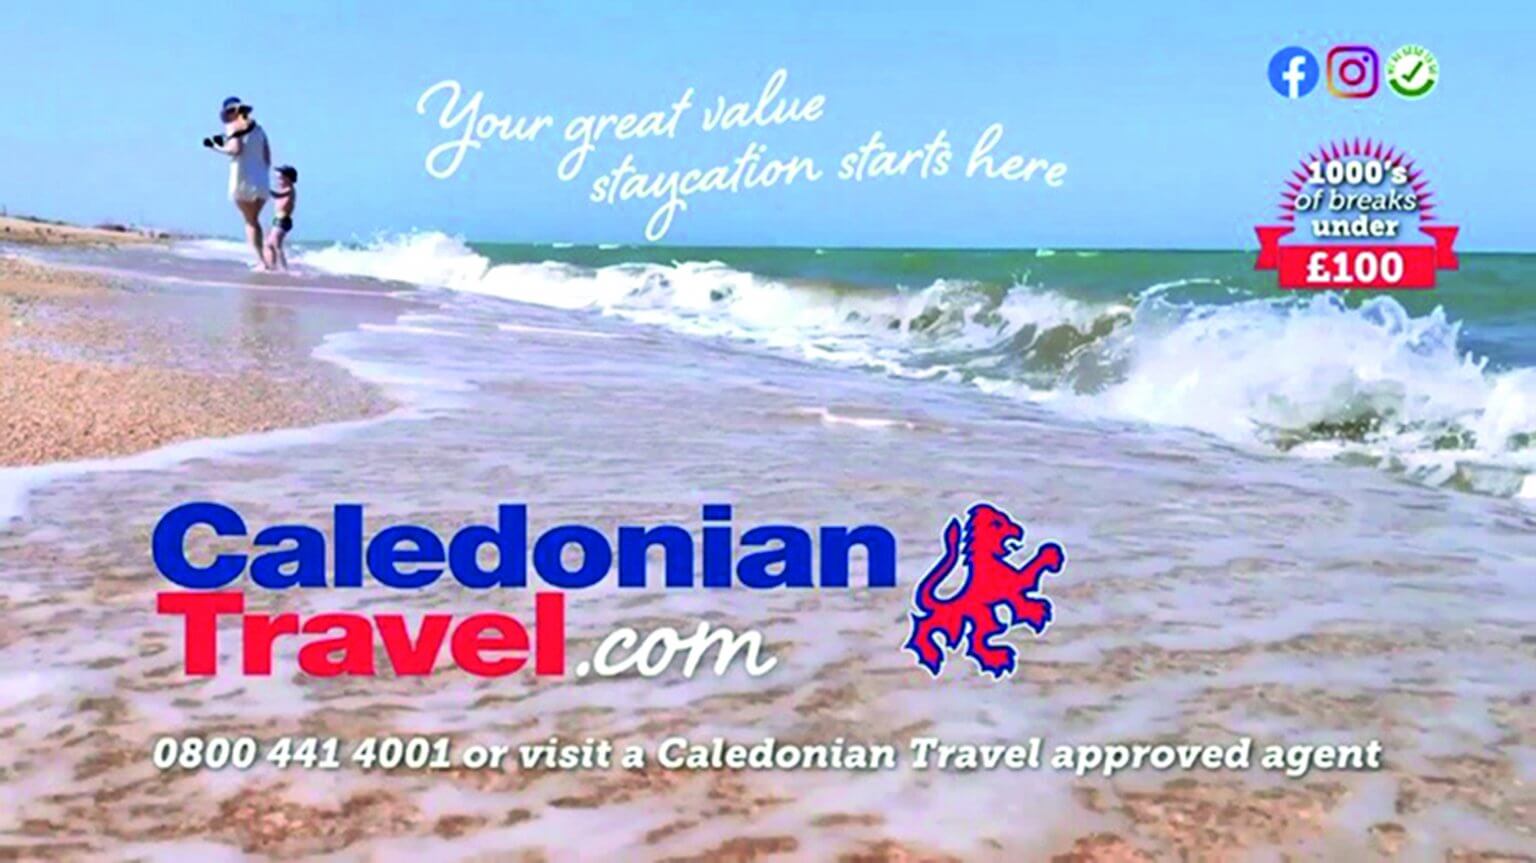 caledonian travel advert